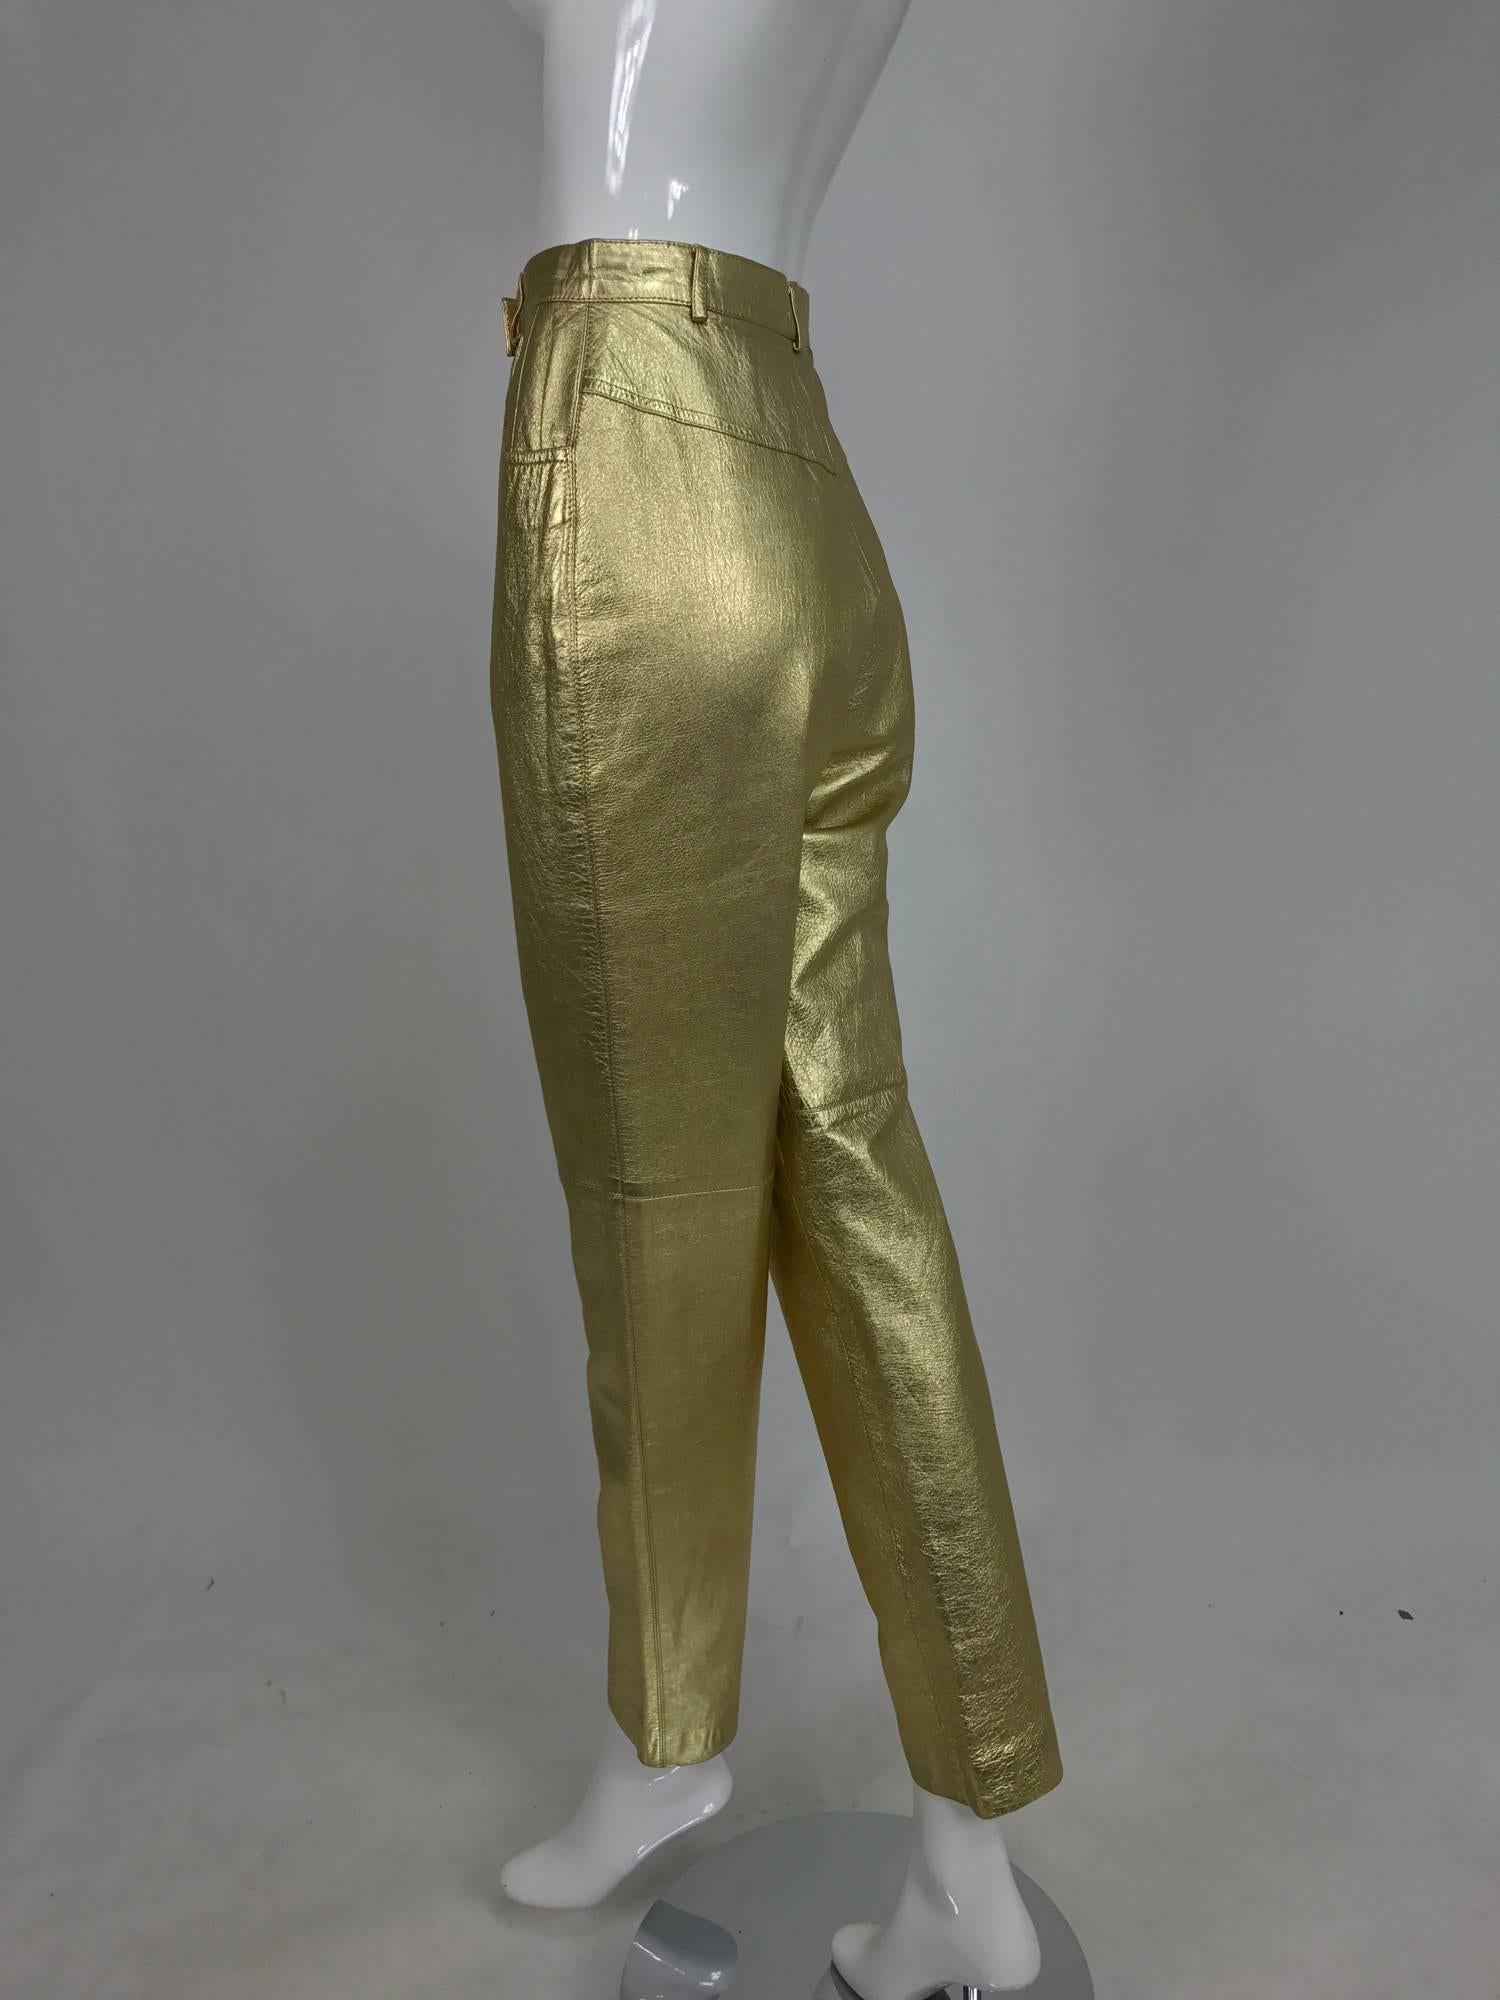 Women's Vintage Ferragamo soft gold leather jeans style trousers 1980s